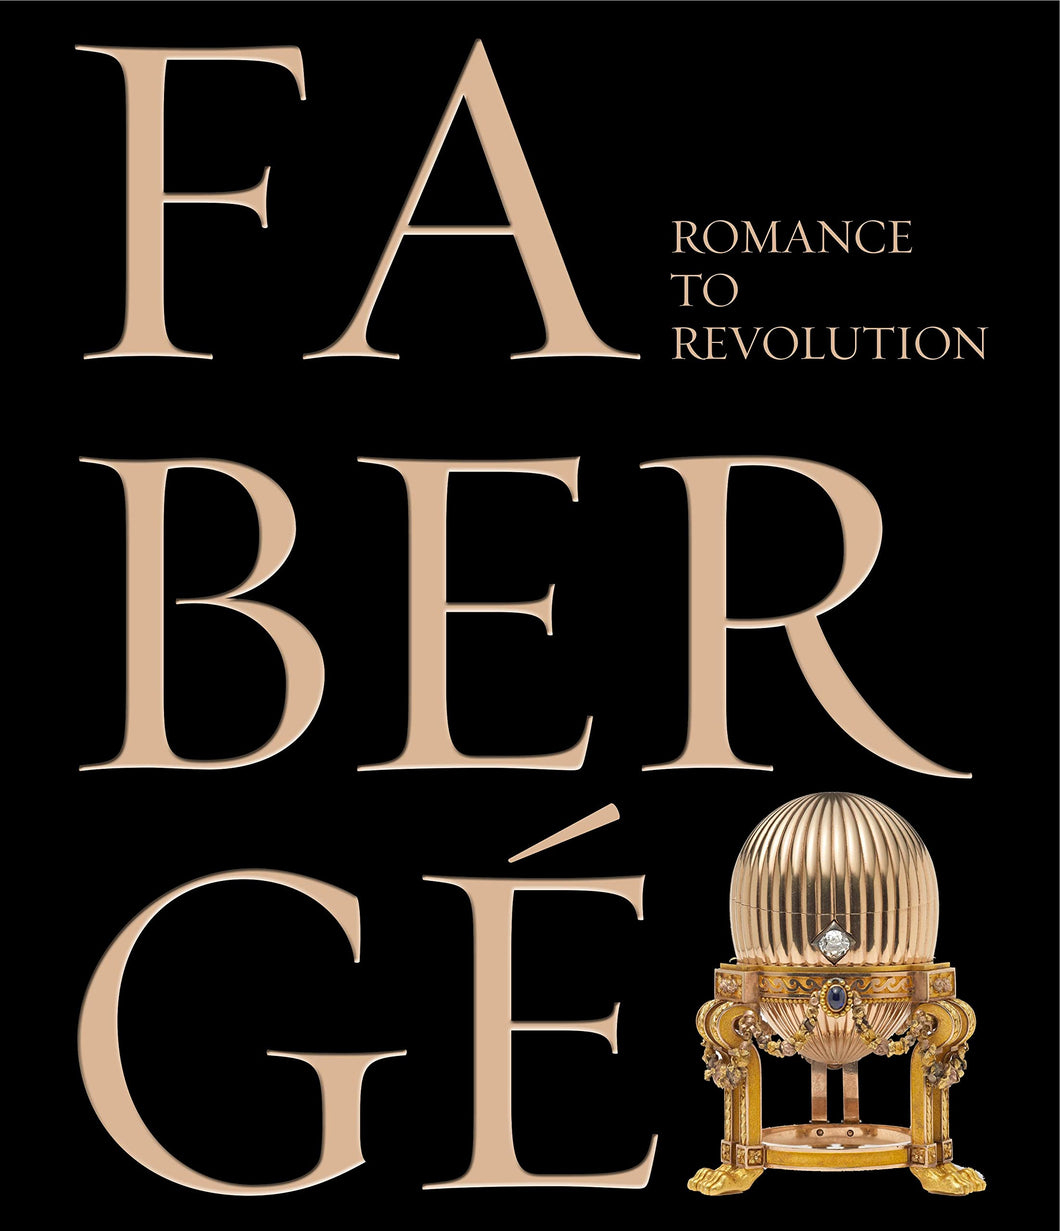 Faberge book. Romance to Revolution. Book of Design. 